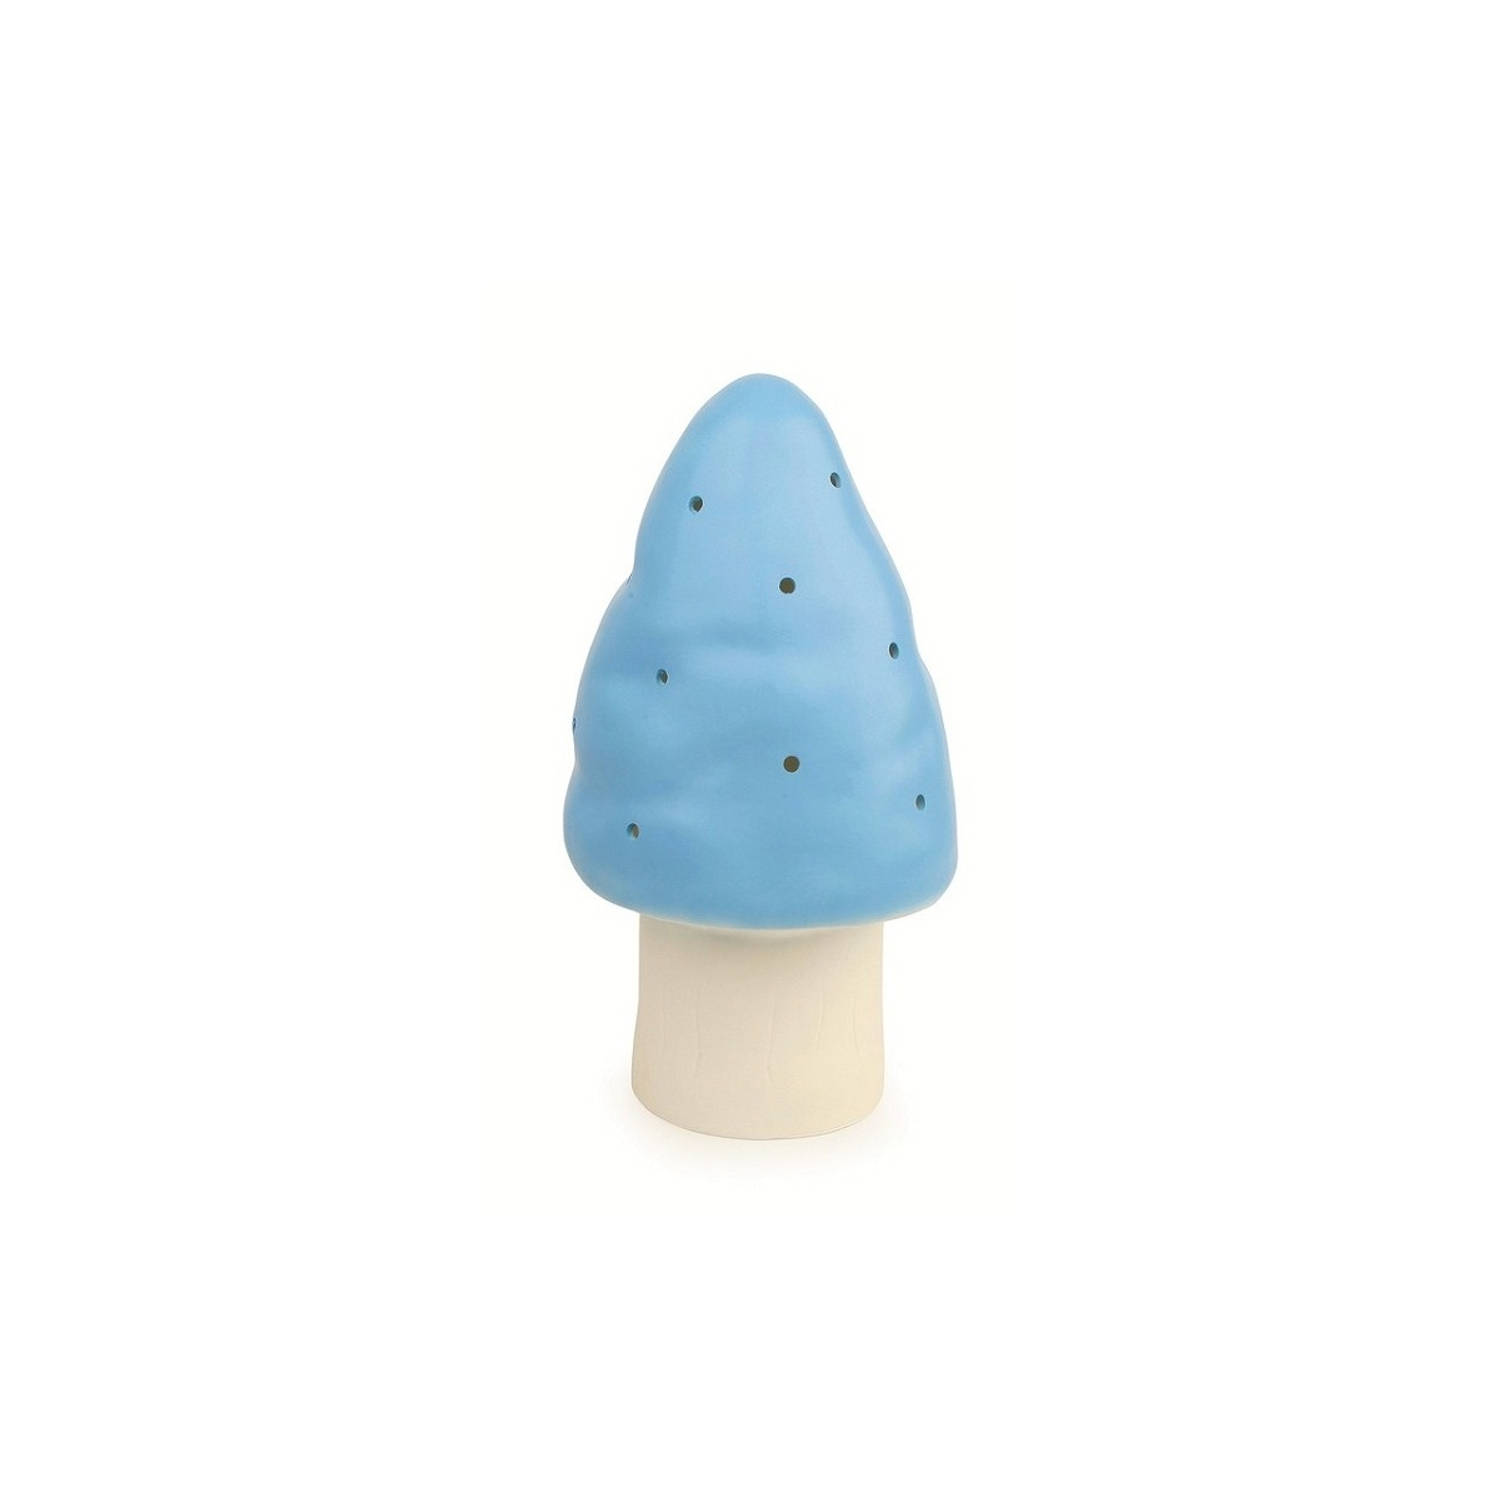 Egmont Toys lamp Puntpaddestoel blauw